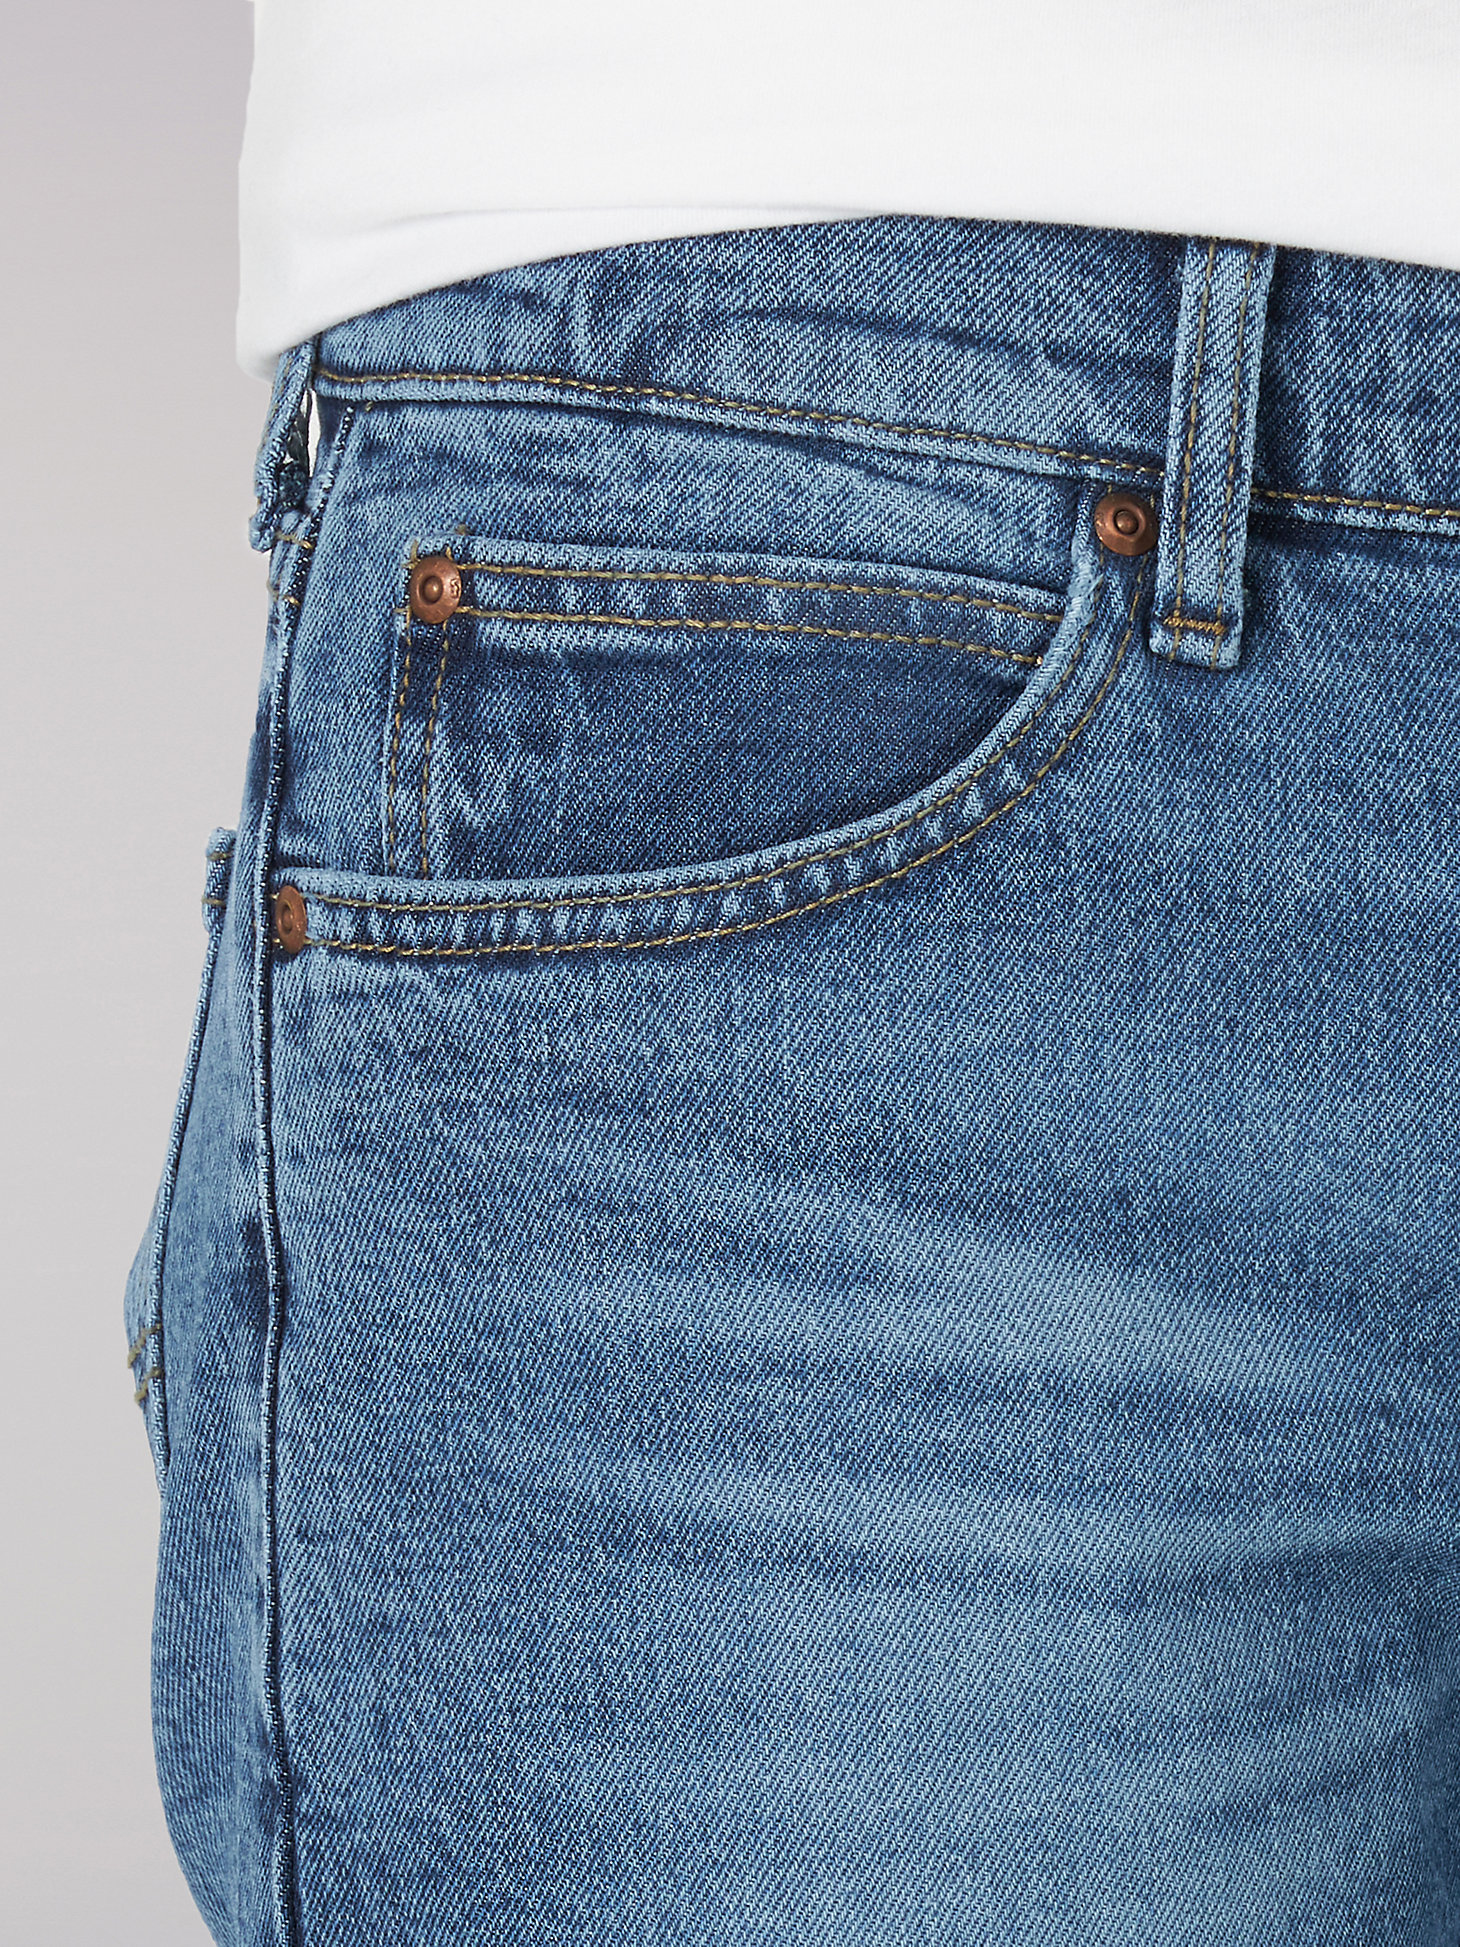 Men's Legendary Slim Straight Jean in Glory alternative view 4